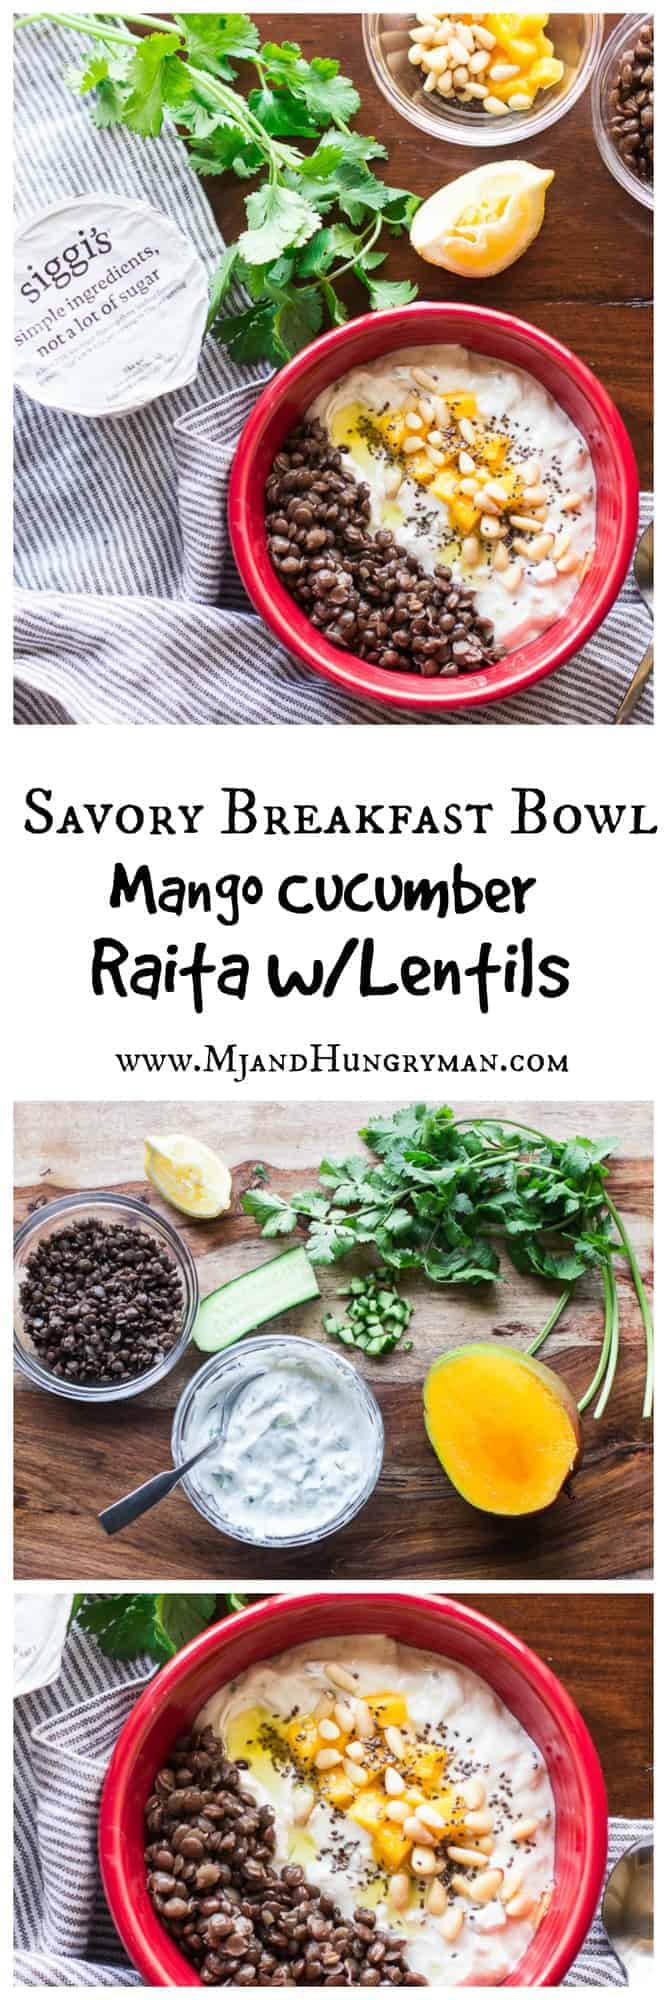 Savory breakfast bowl mango cucumber raita with lentils